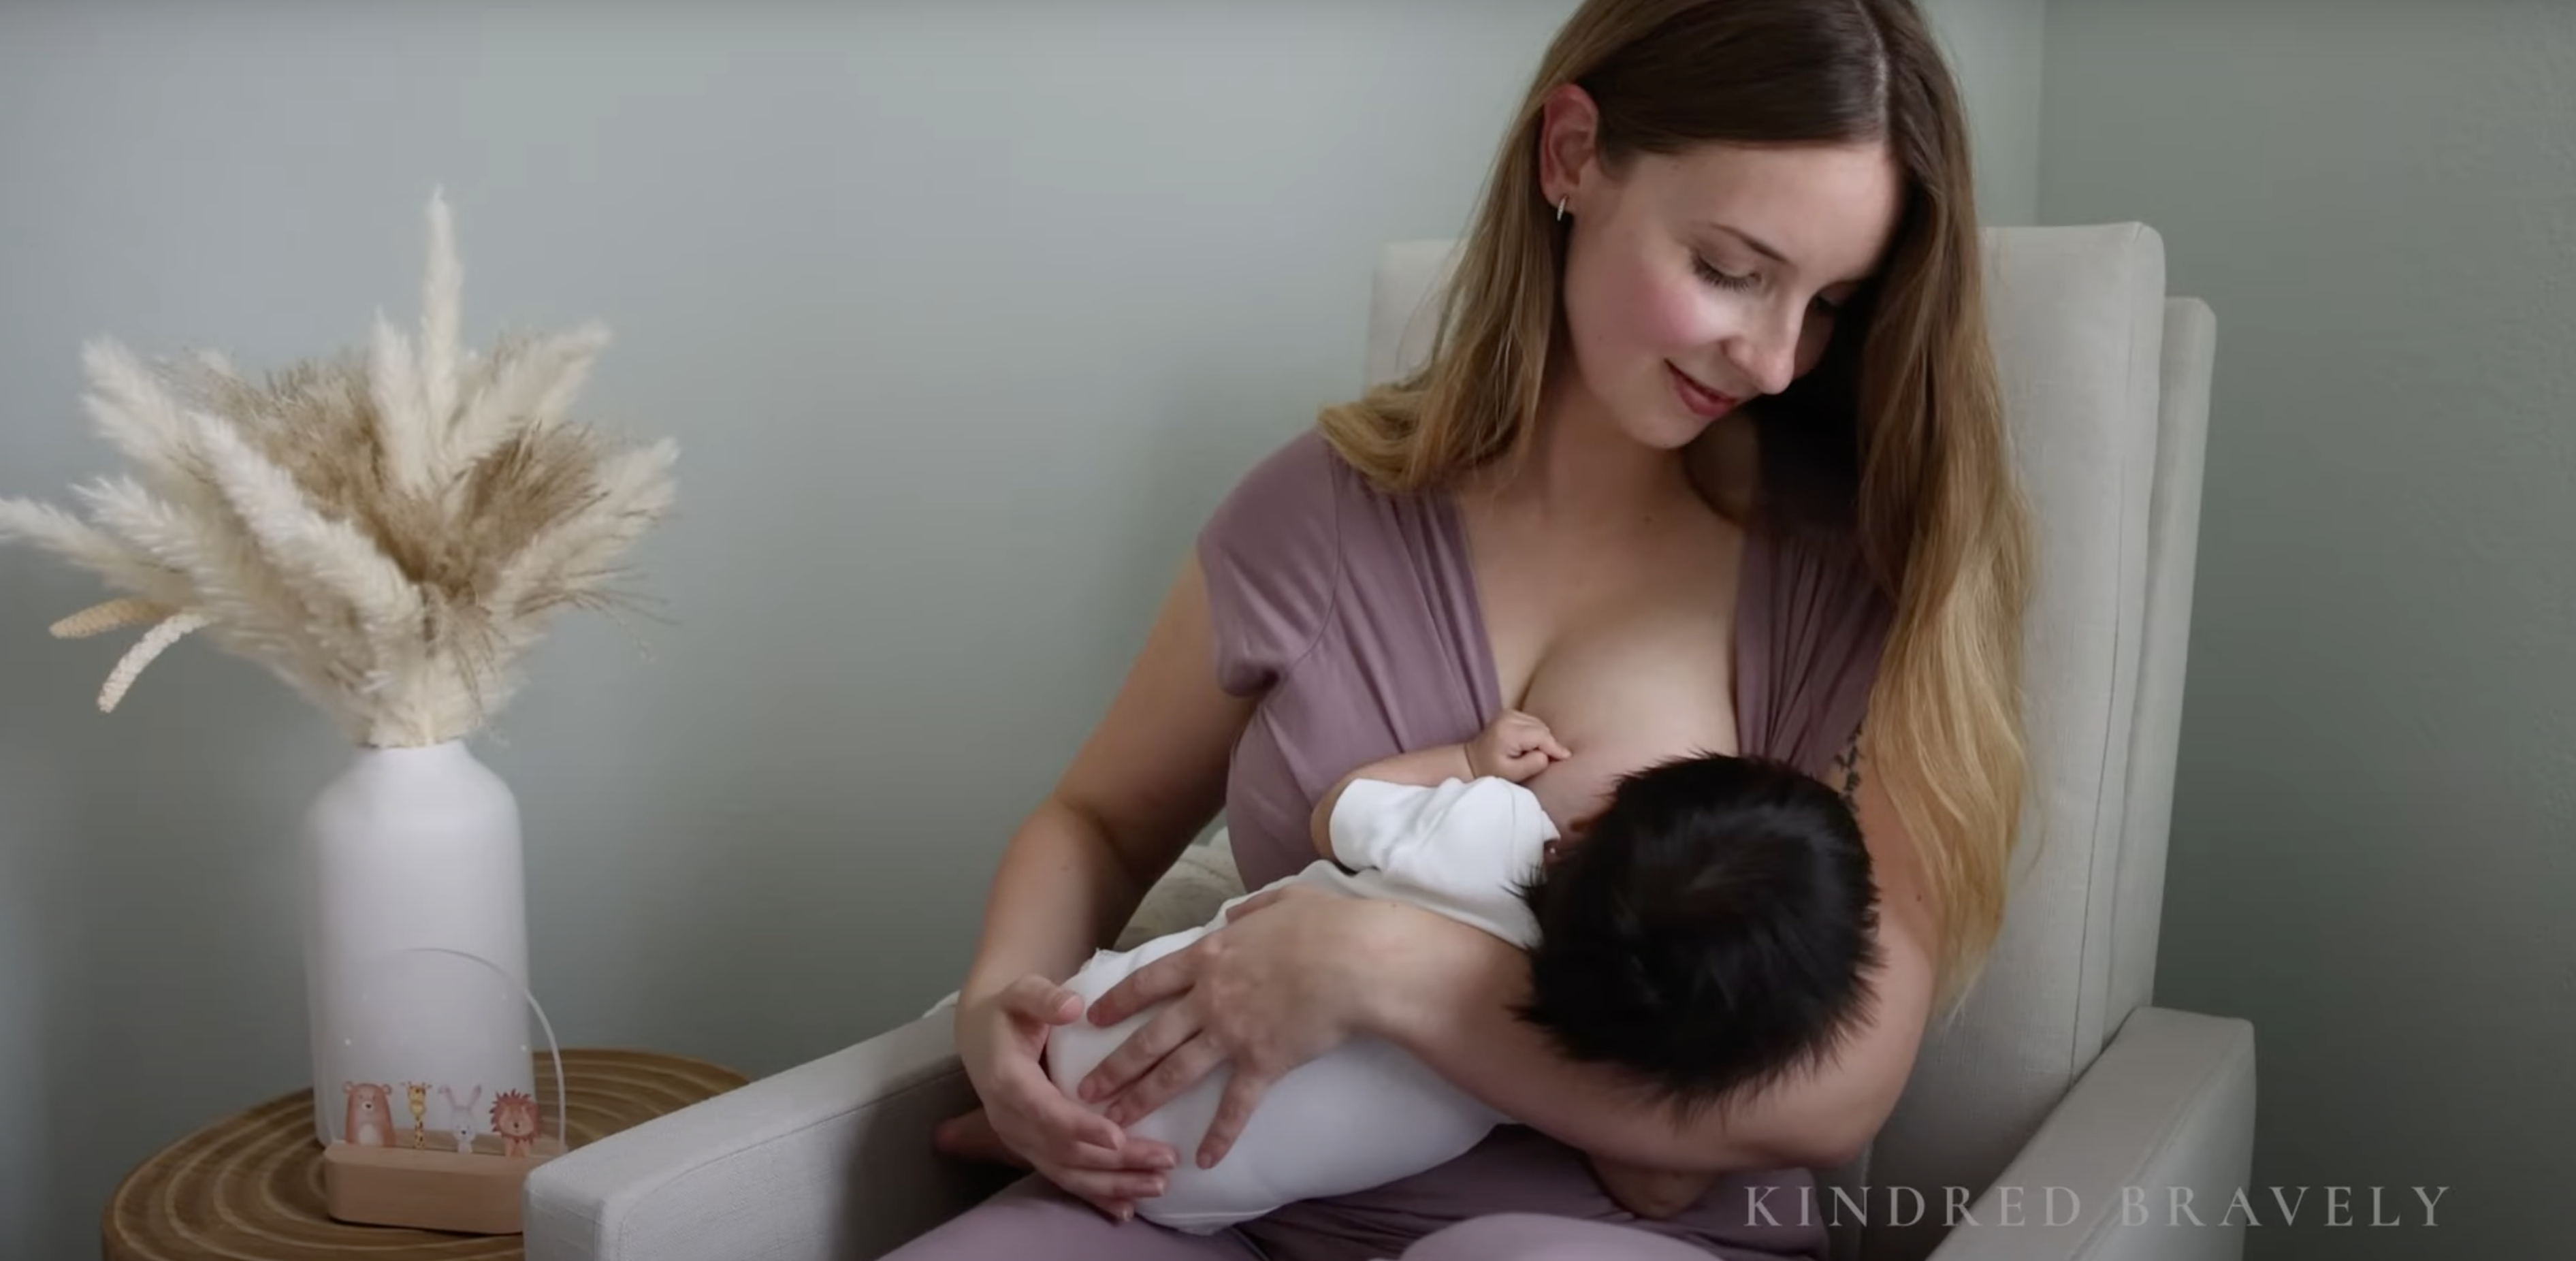 Load video: Kindred Bravely. By Moms. For Moms.